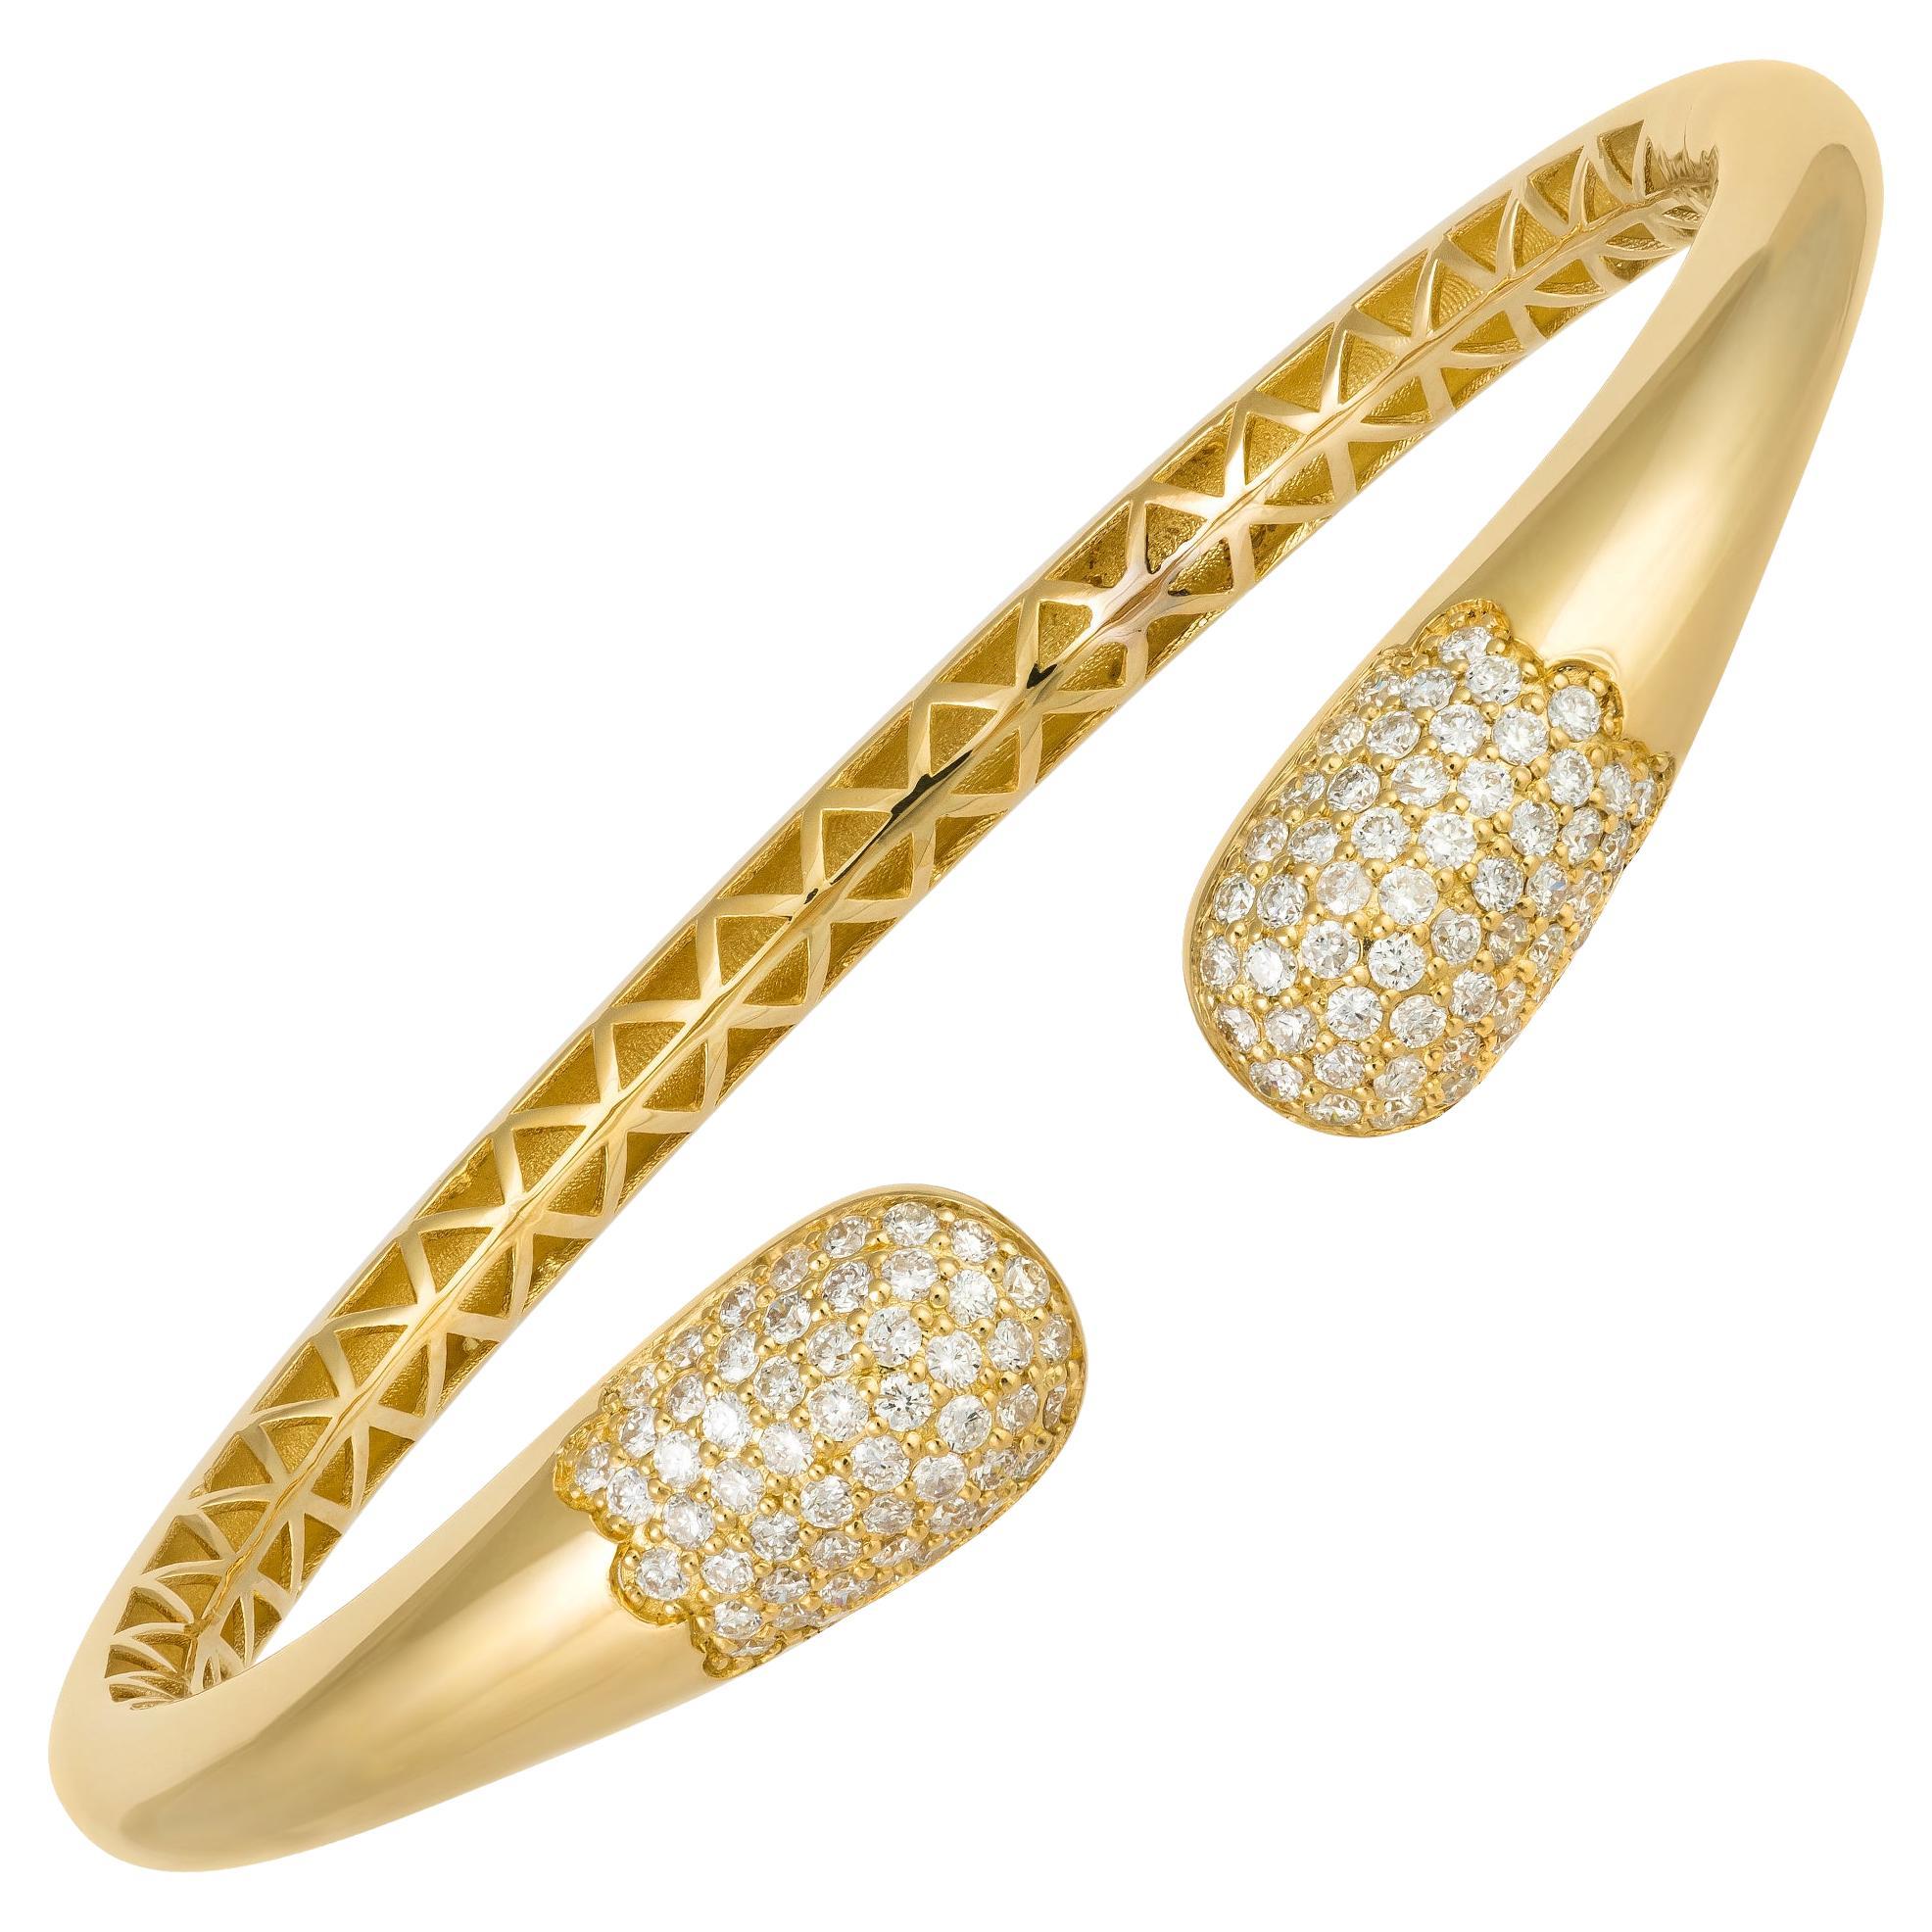 Stylish Yellow Gold 18K Bracelet Diamond for Her